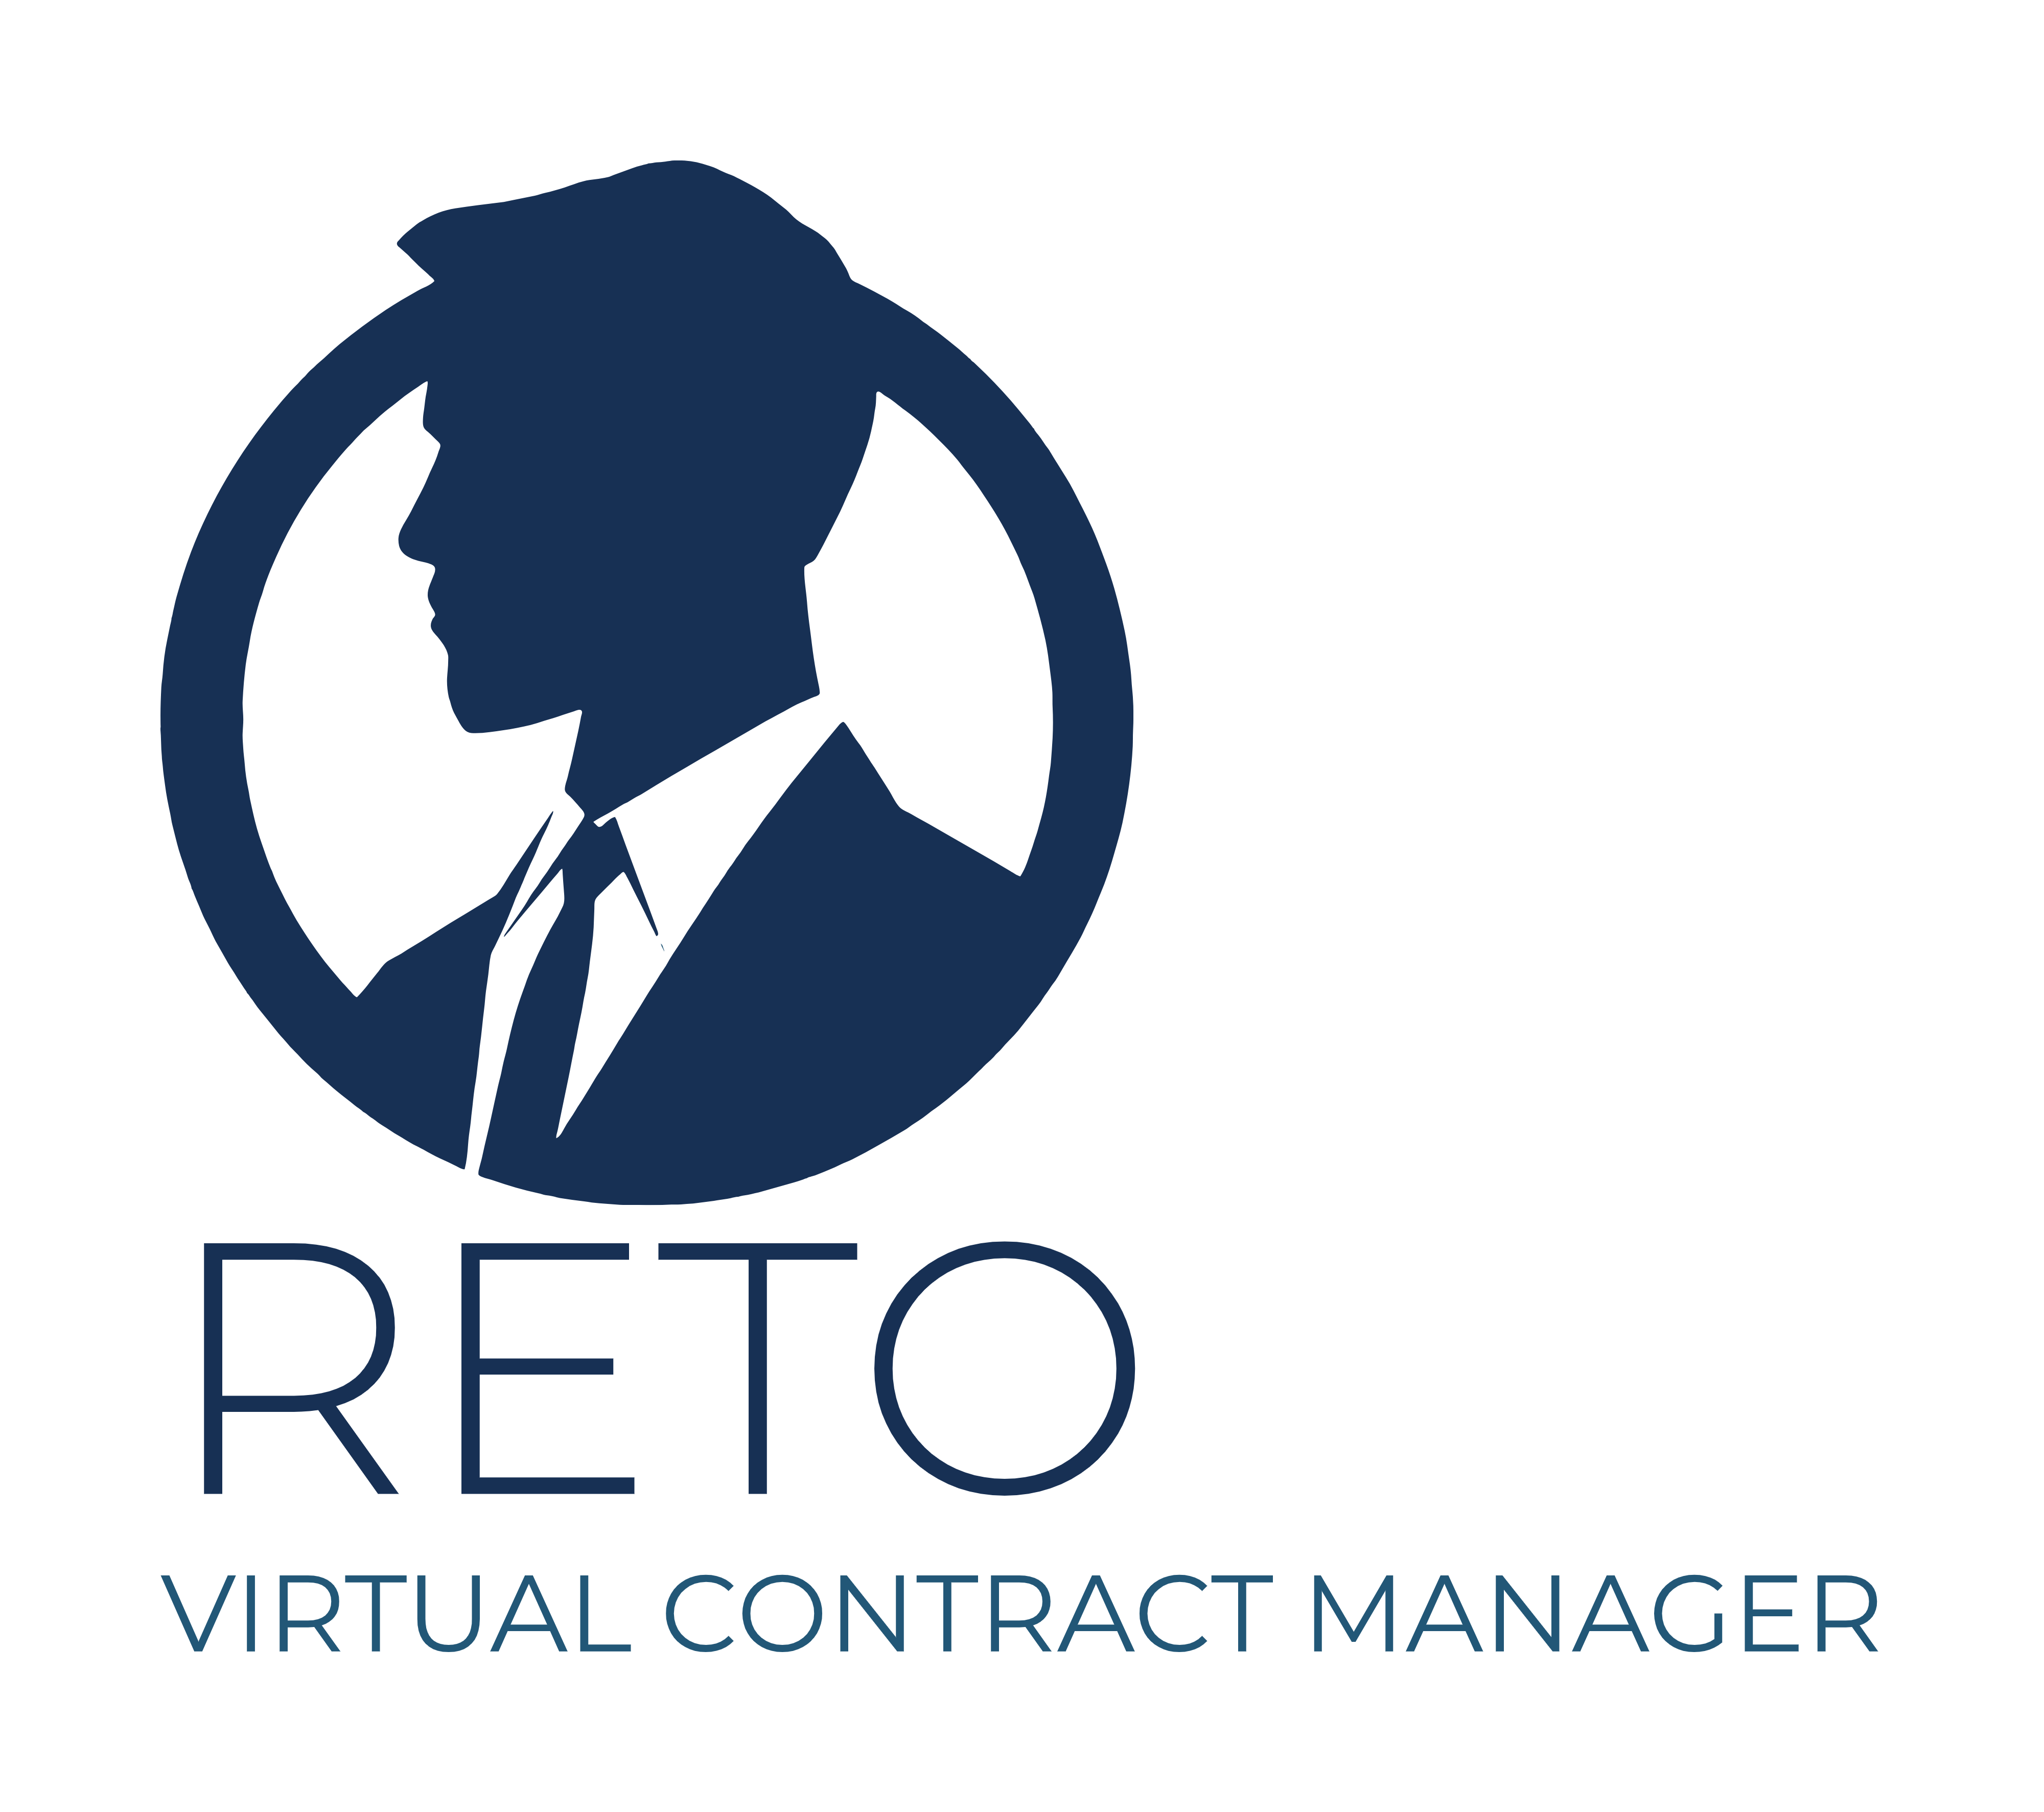 Innovativer Virtueller Contract Manager "Reto" revolutioniert die Vertragsverwaltung